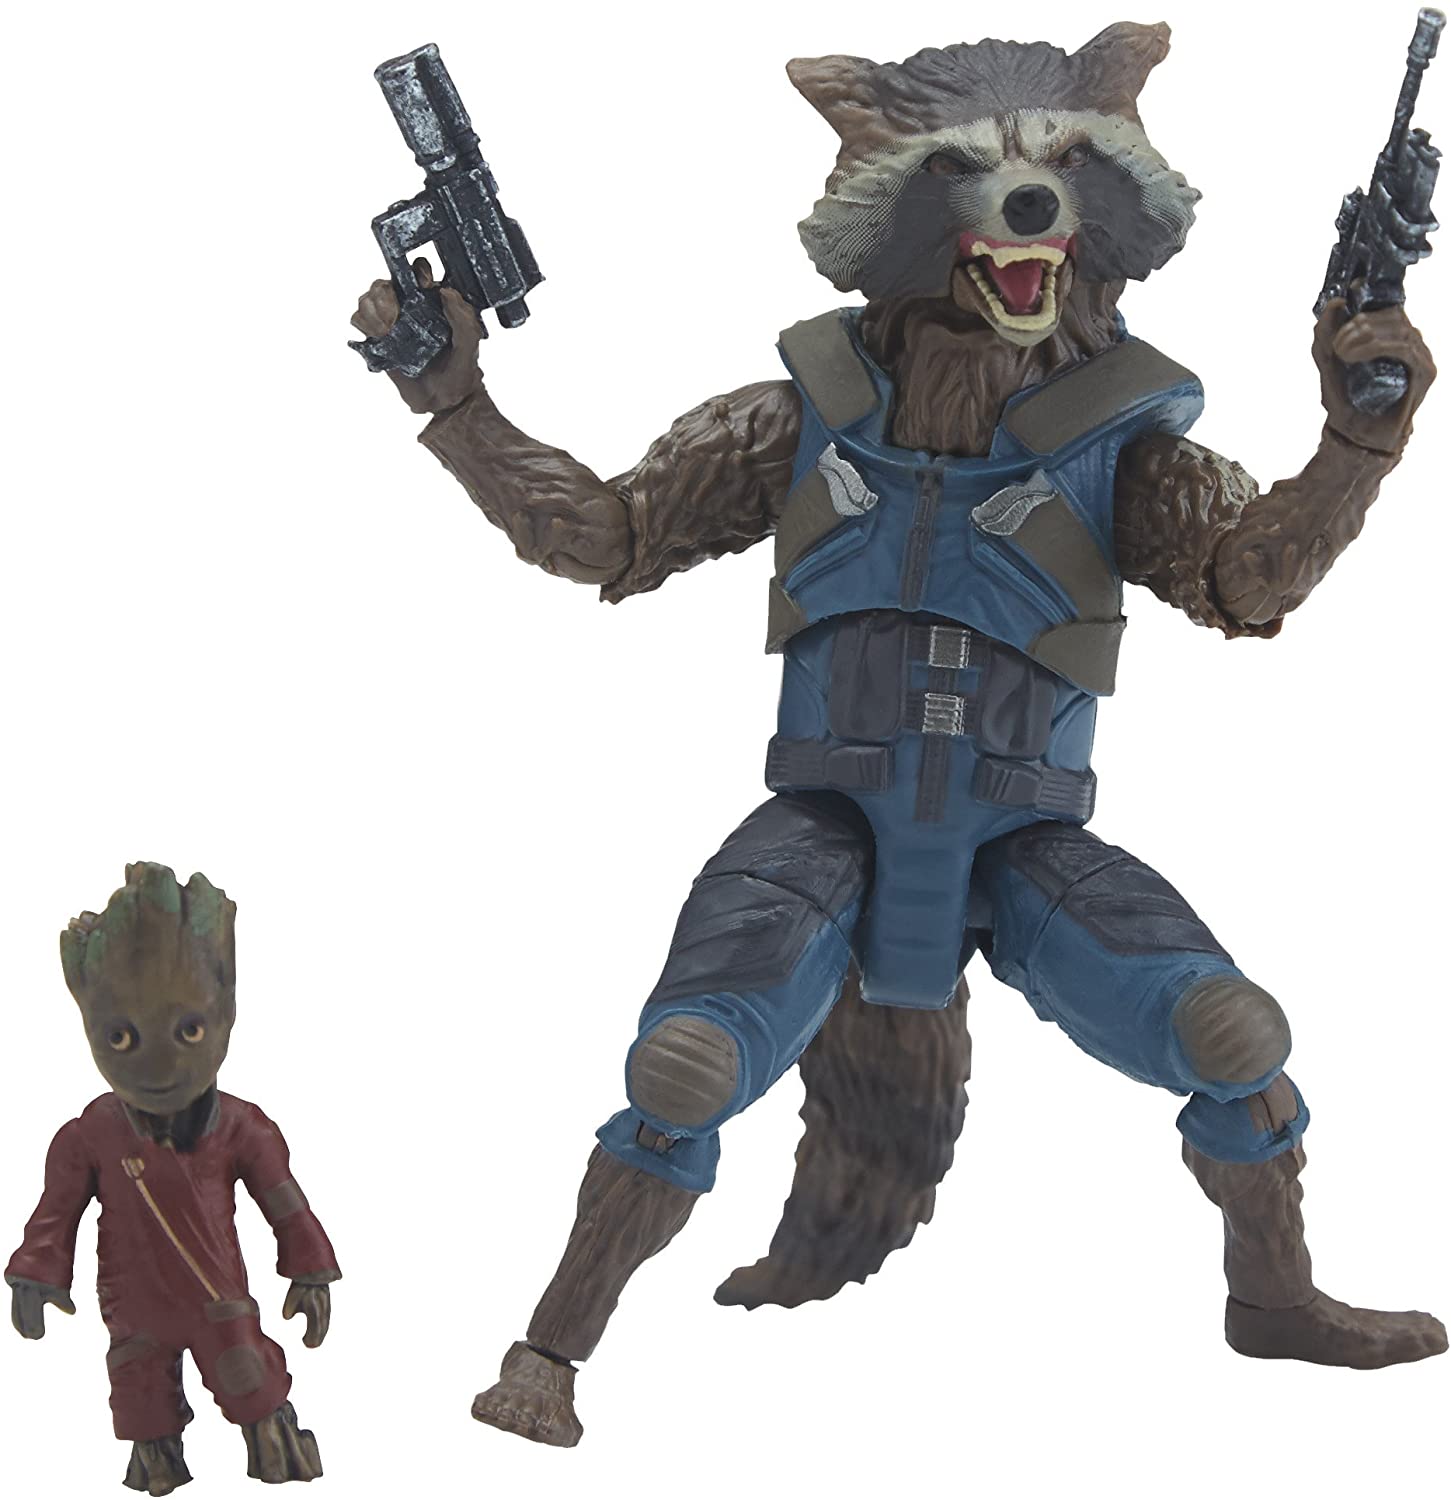 Marvel Legends Guardians of the Galaxy Rocket Raccoon and Baby Groot Oficial Licenciado